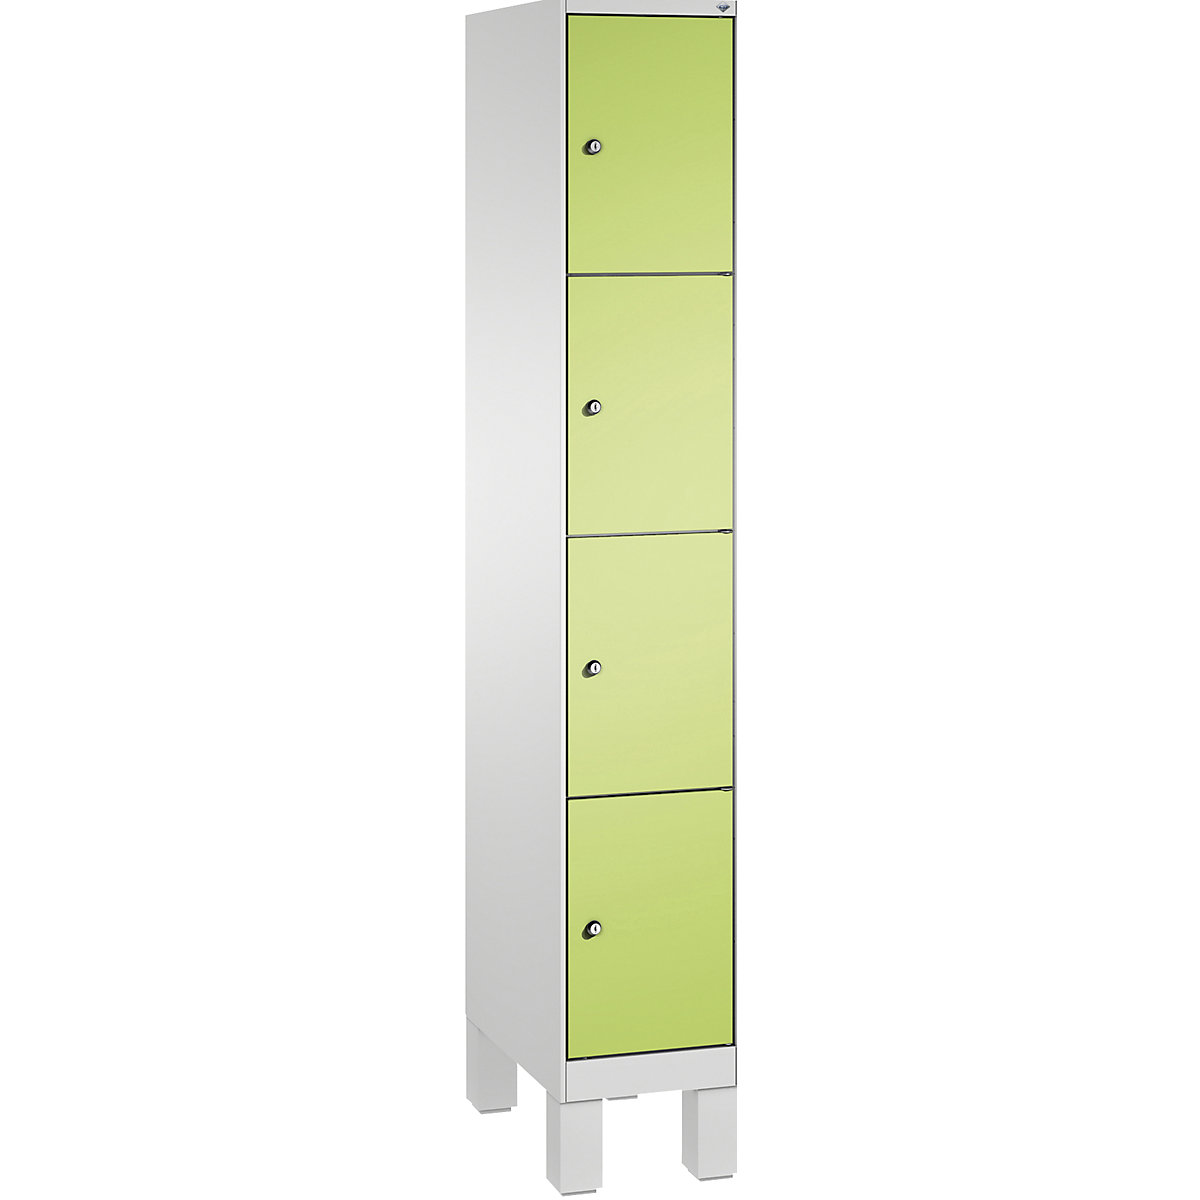 EVOLO locker unit, with feet – C+P, 1 compartment, 4 shelf compartments, compartment width 300 mm, light grey / viridian green